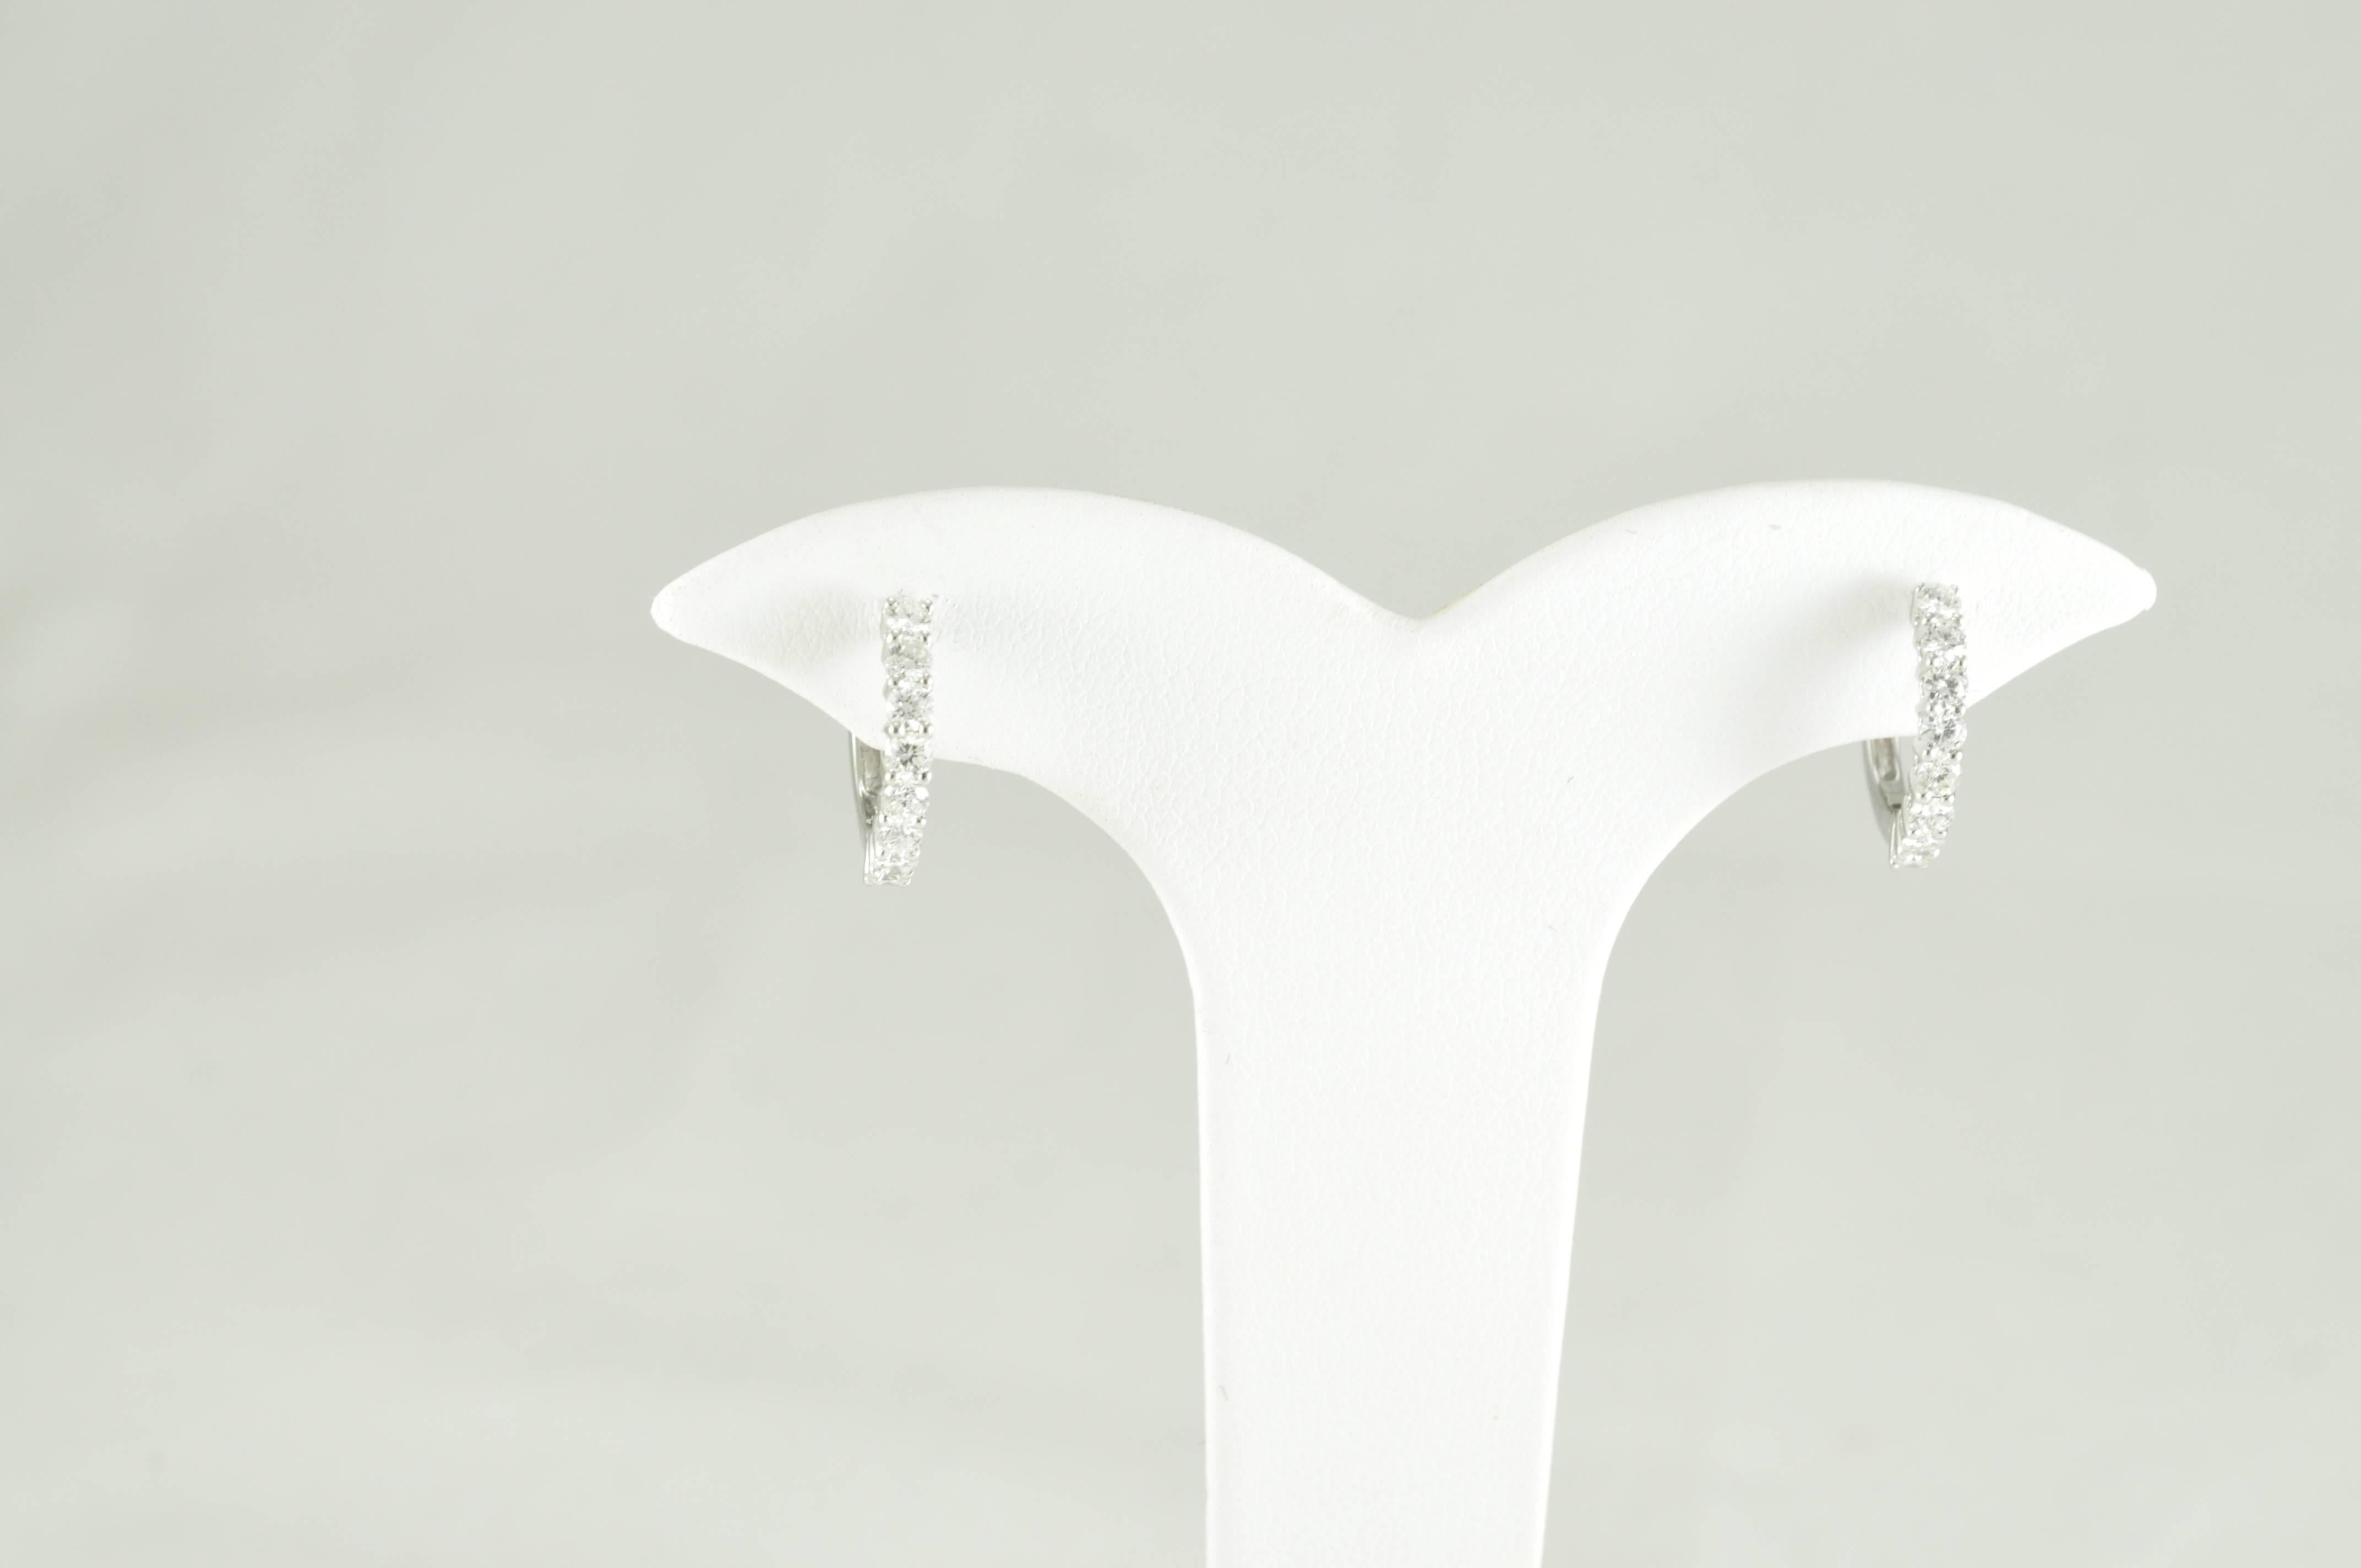 18k White Gold Diamond Hoop Earrings with 0.64ctw Round Diamonds